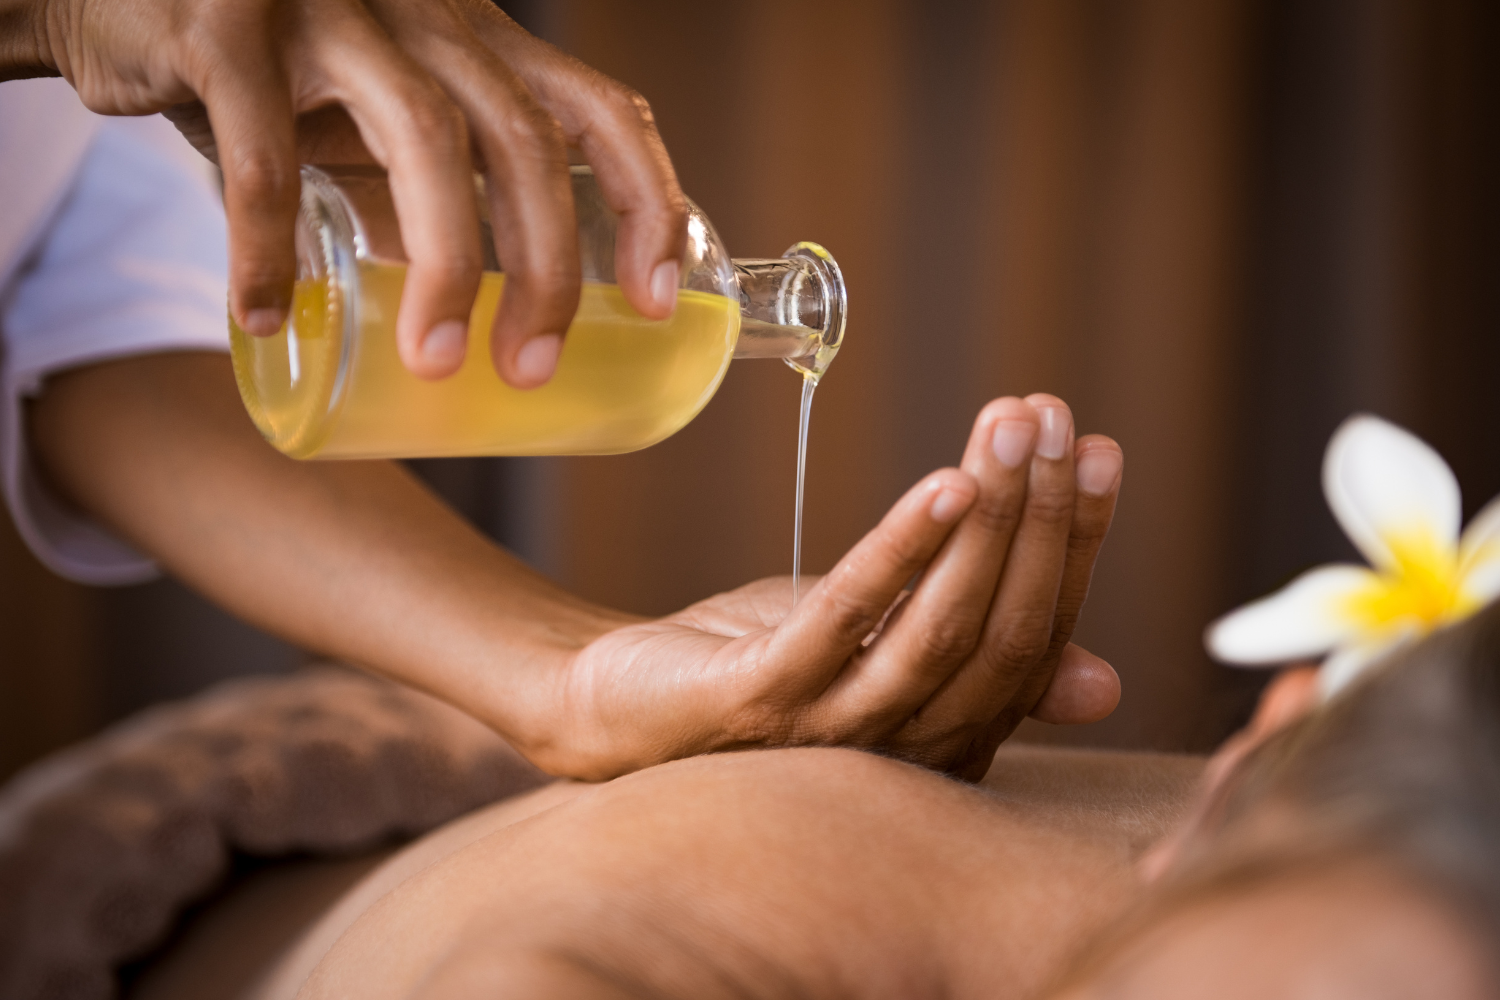 Soothe Like Honey Massage Oil  CBD Massage Oil – Jimbo & Jules